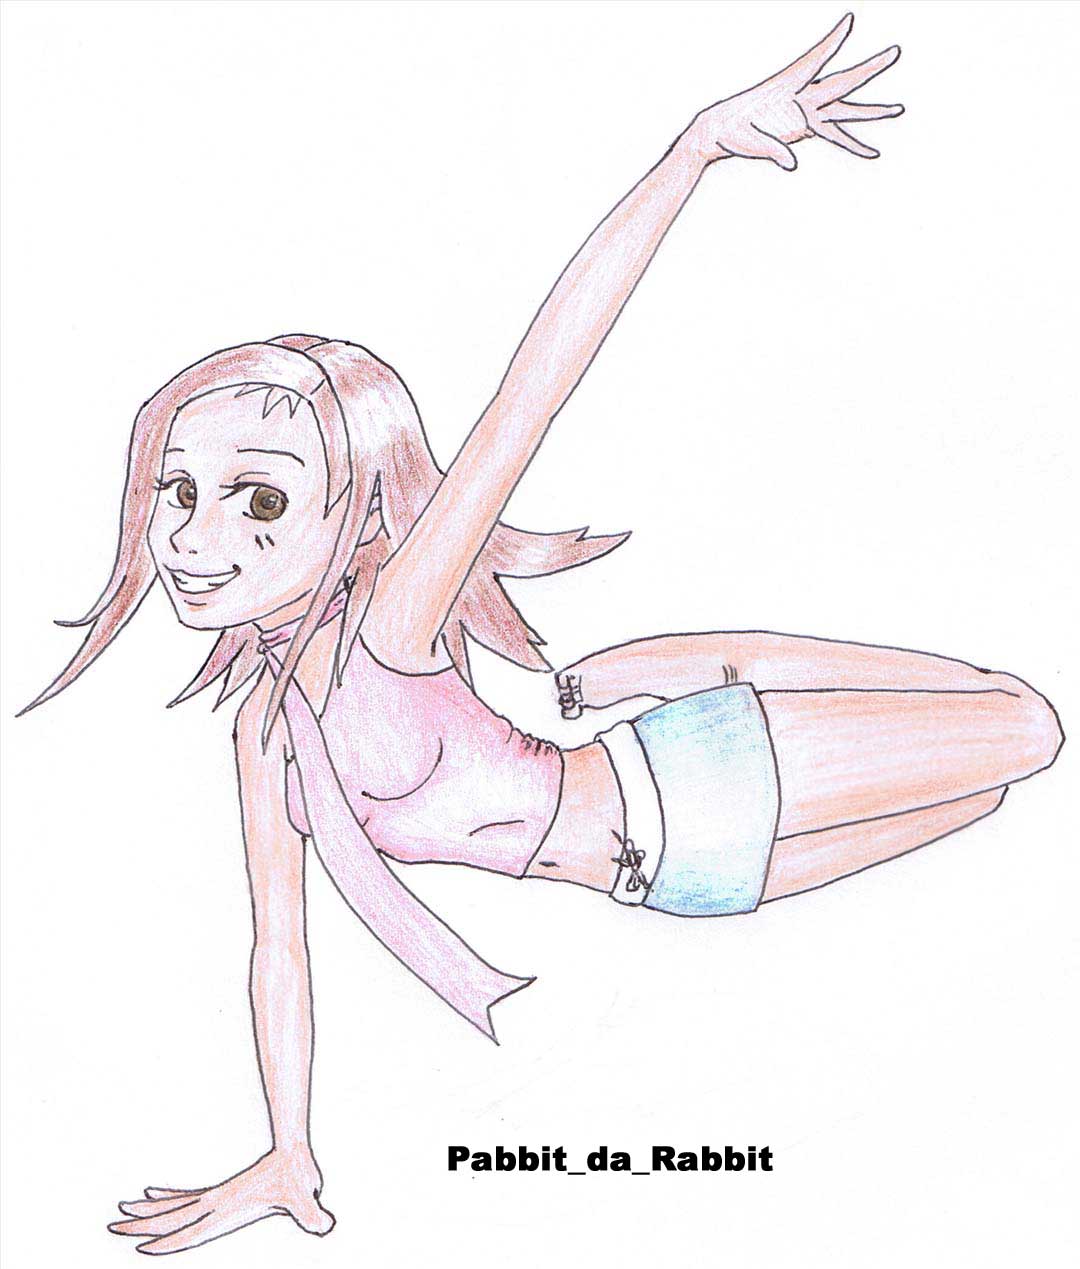 Jumping by Pabbit_da_Rabbit